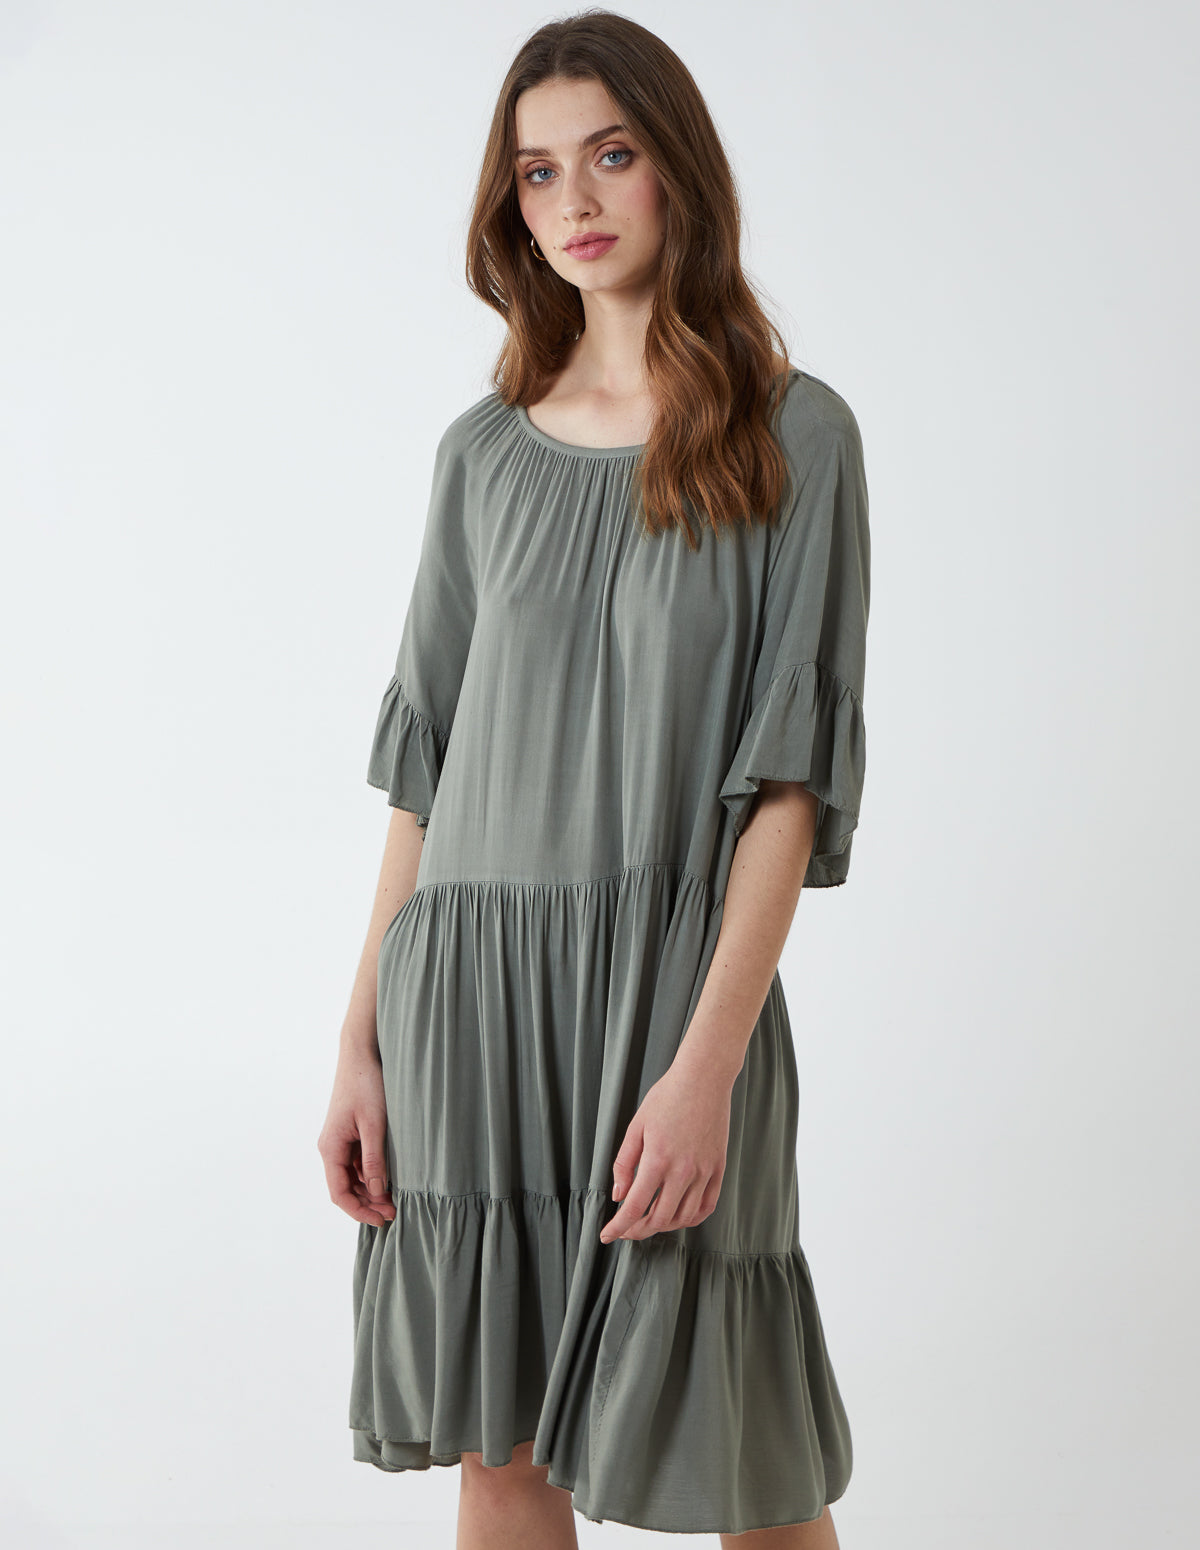 LISA - Scoop Neck Tiered Dress - O/S / KHAKI